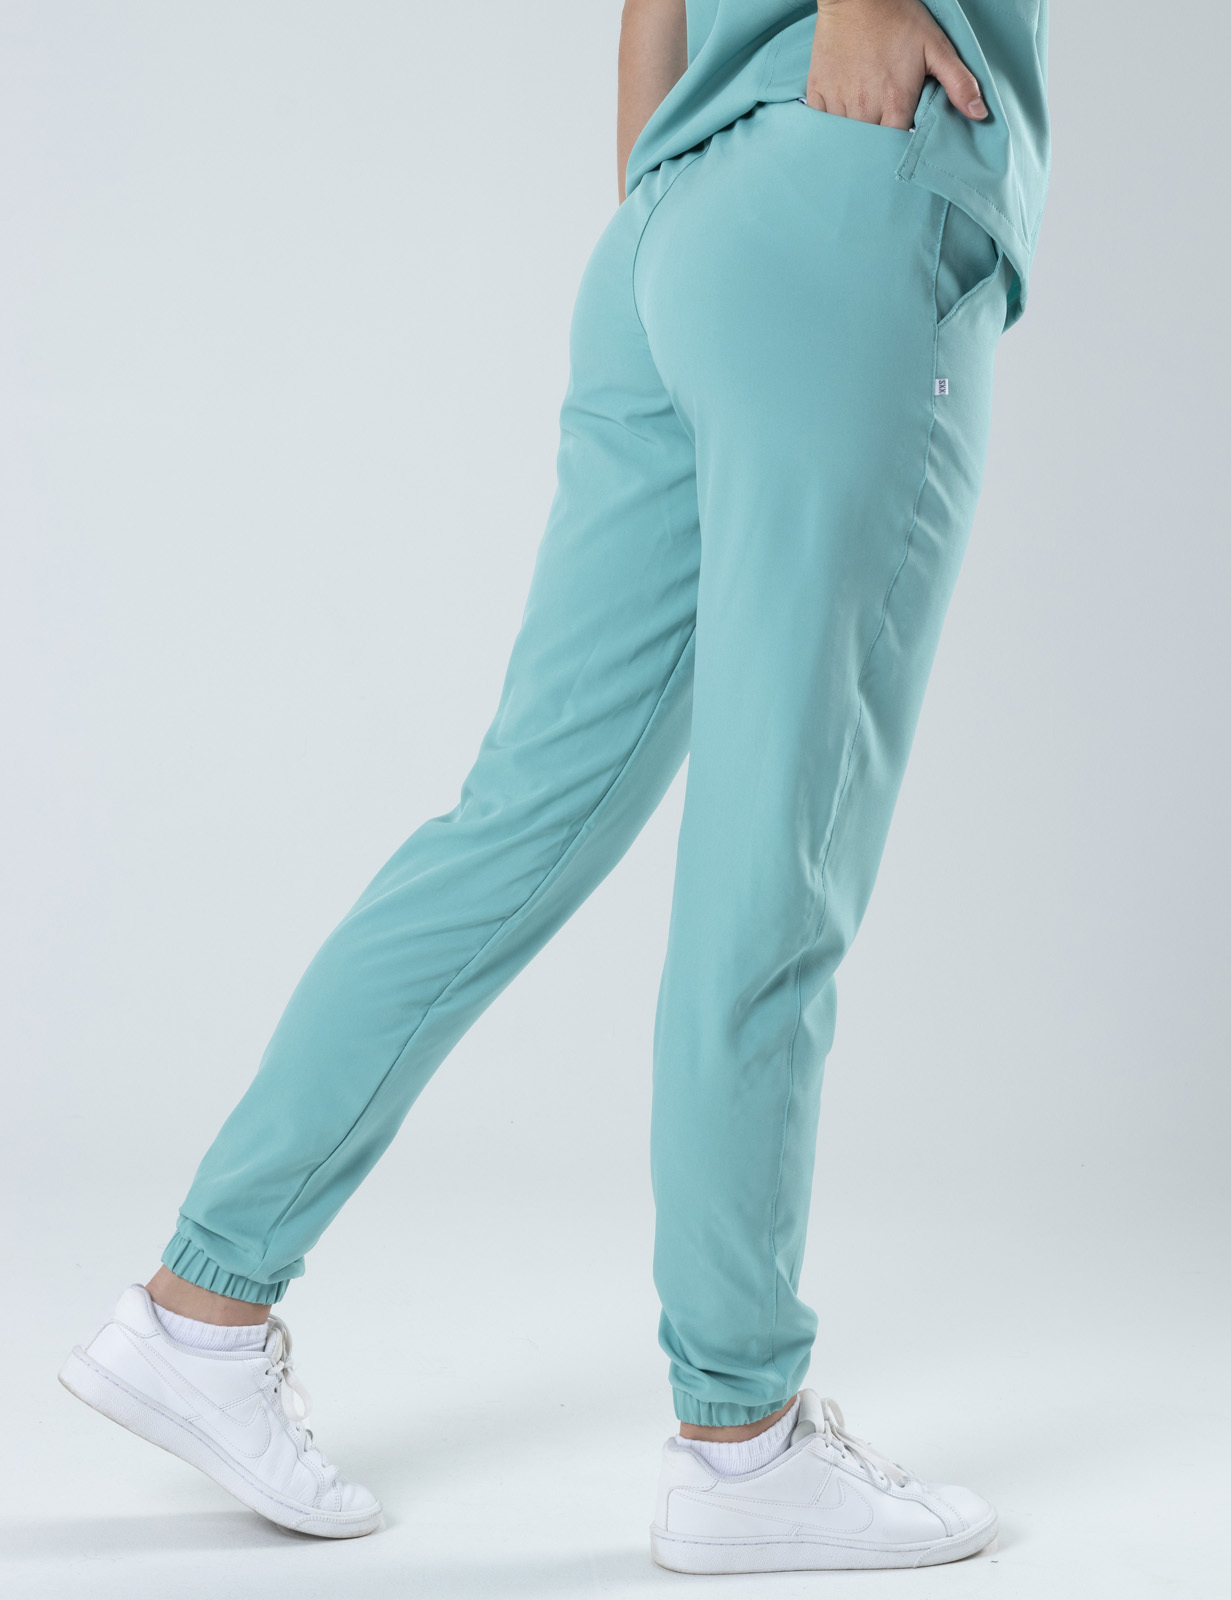 Anon Women's Jogger Pants (Poly/Spandex) - Cool Mint XS